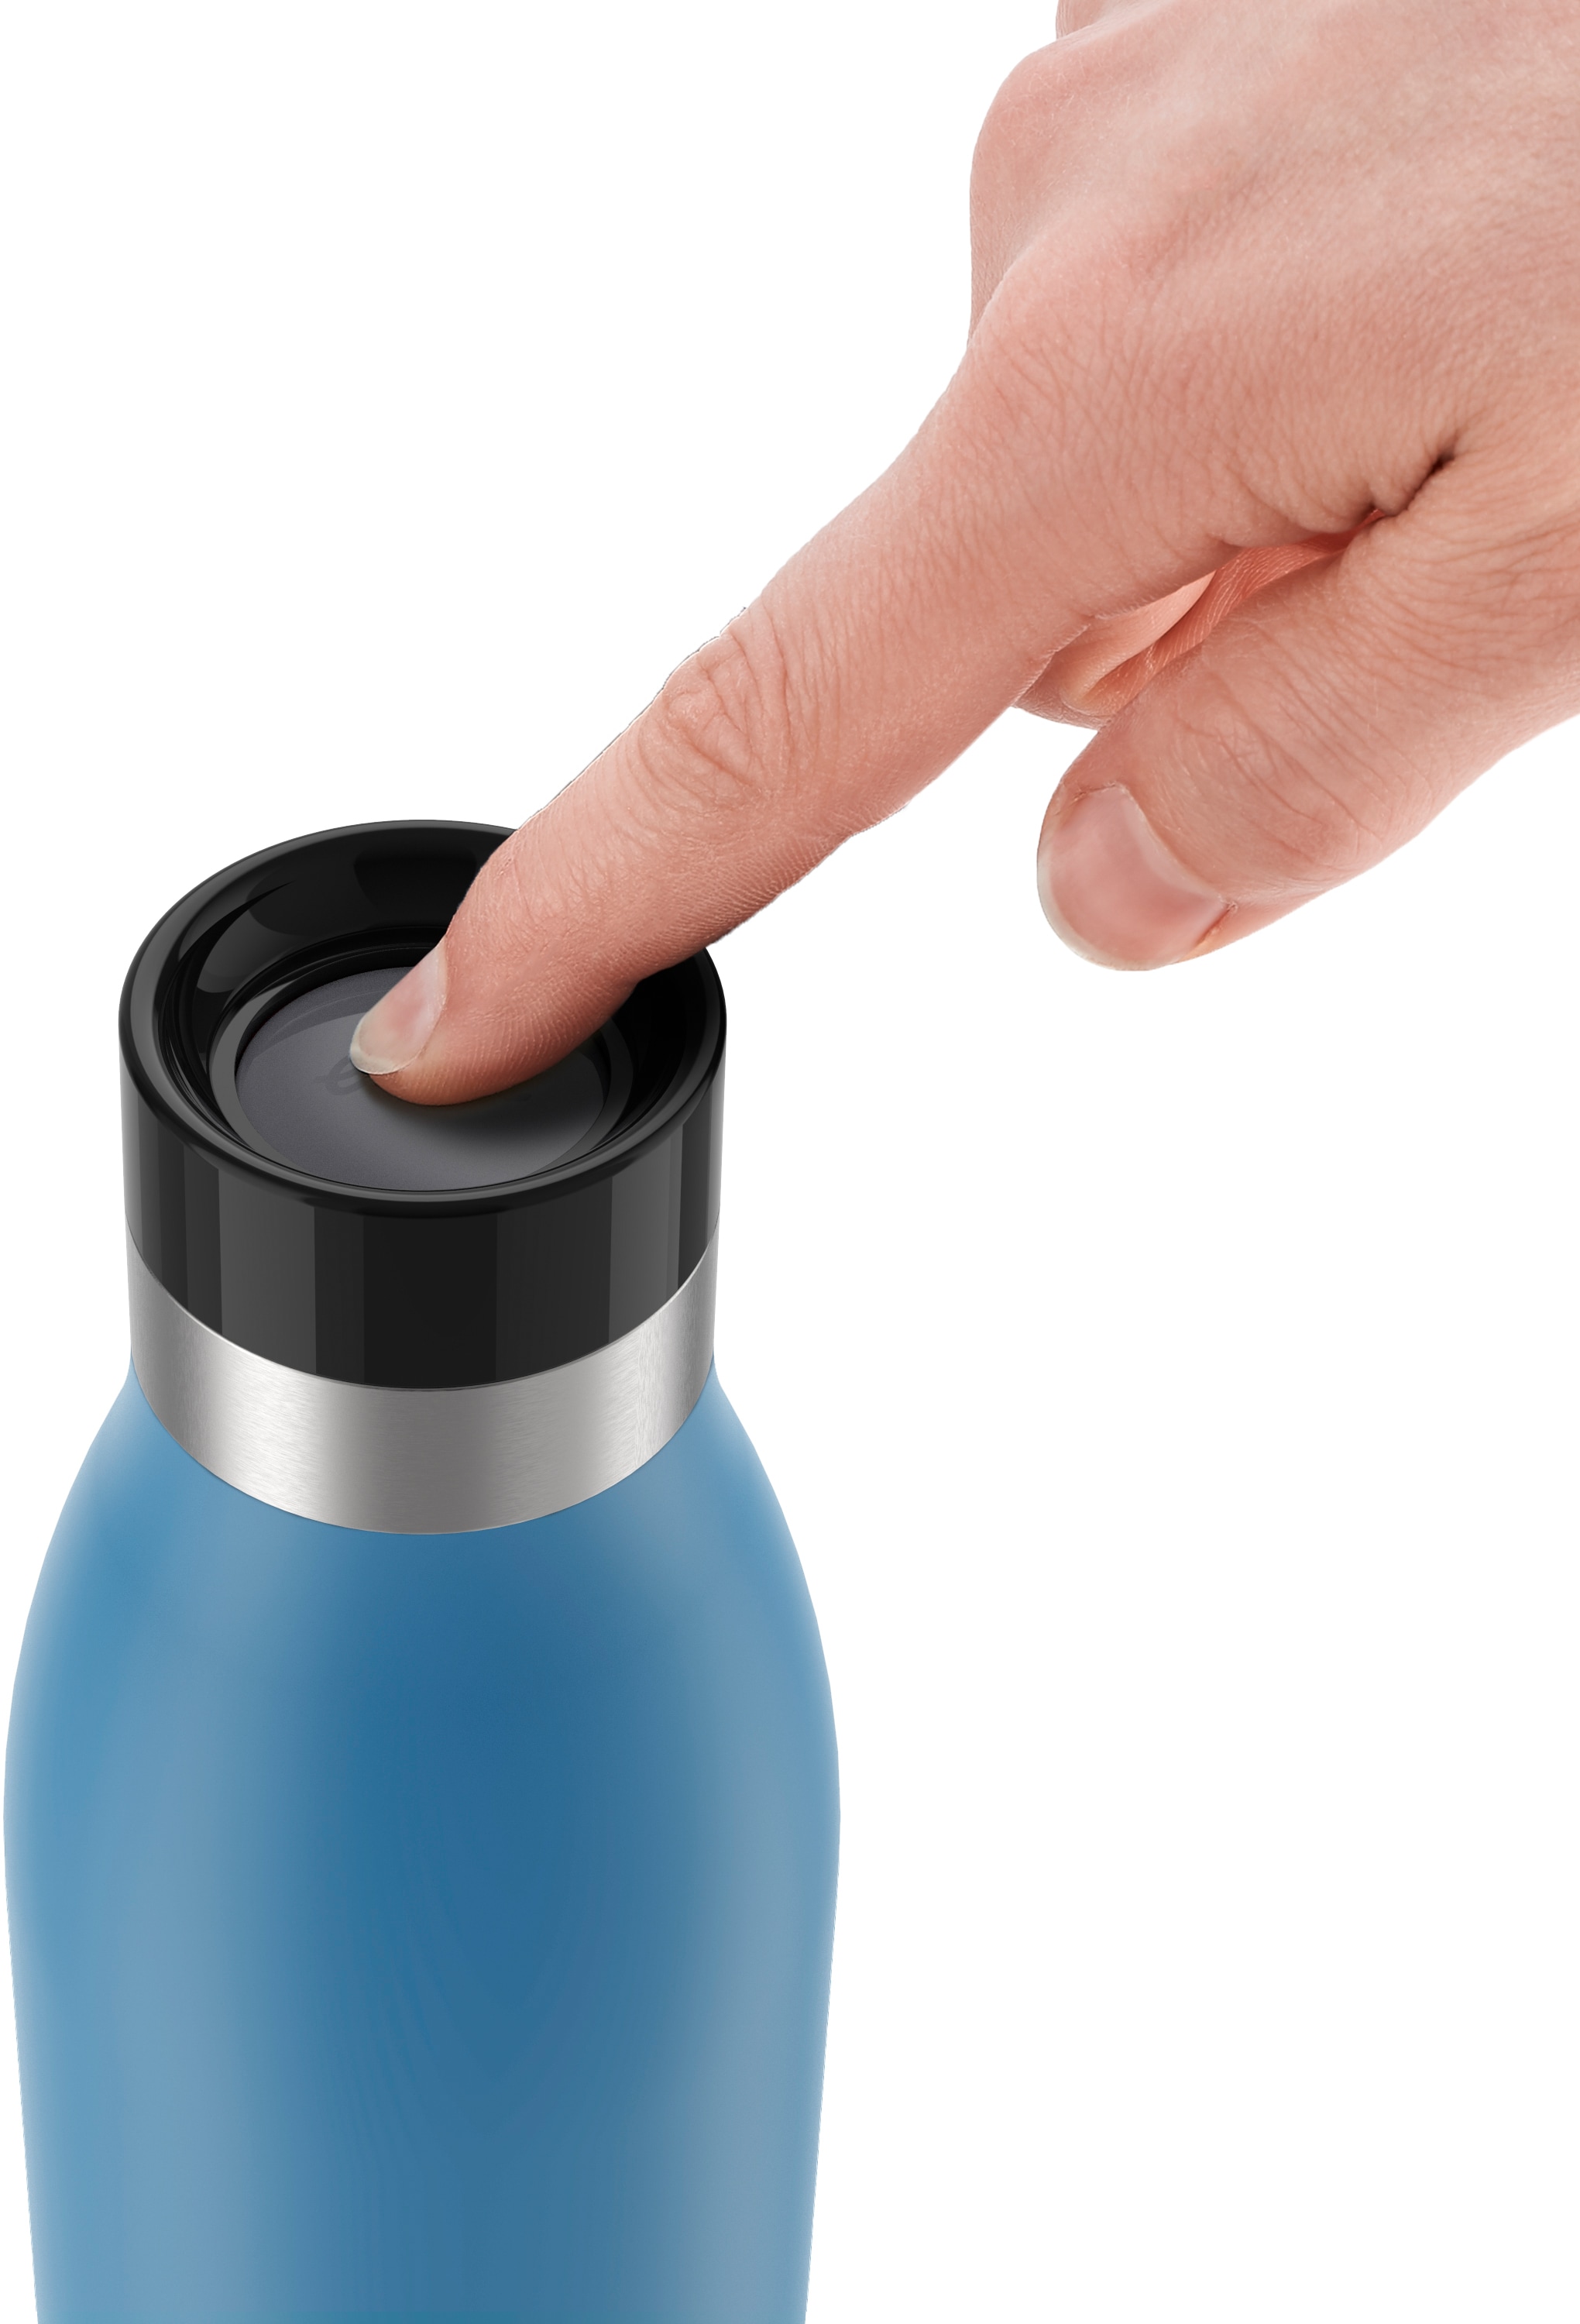 Emsa Trinkflasche »Bludrop Color«, (1 tlg.), Edelstahl, Quick-Press Deckel, 12h warm/24h kühl